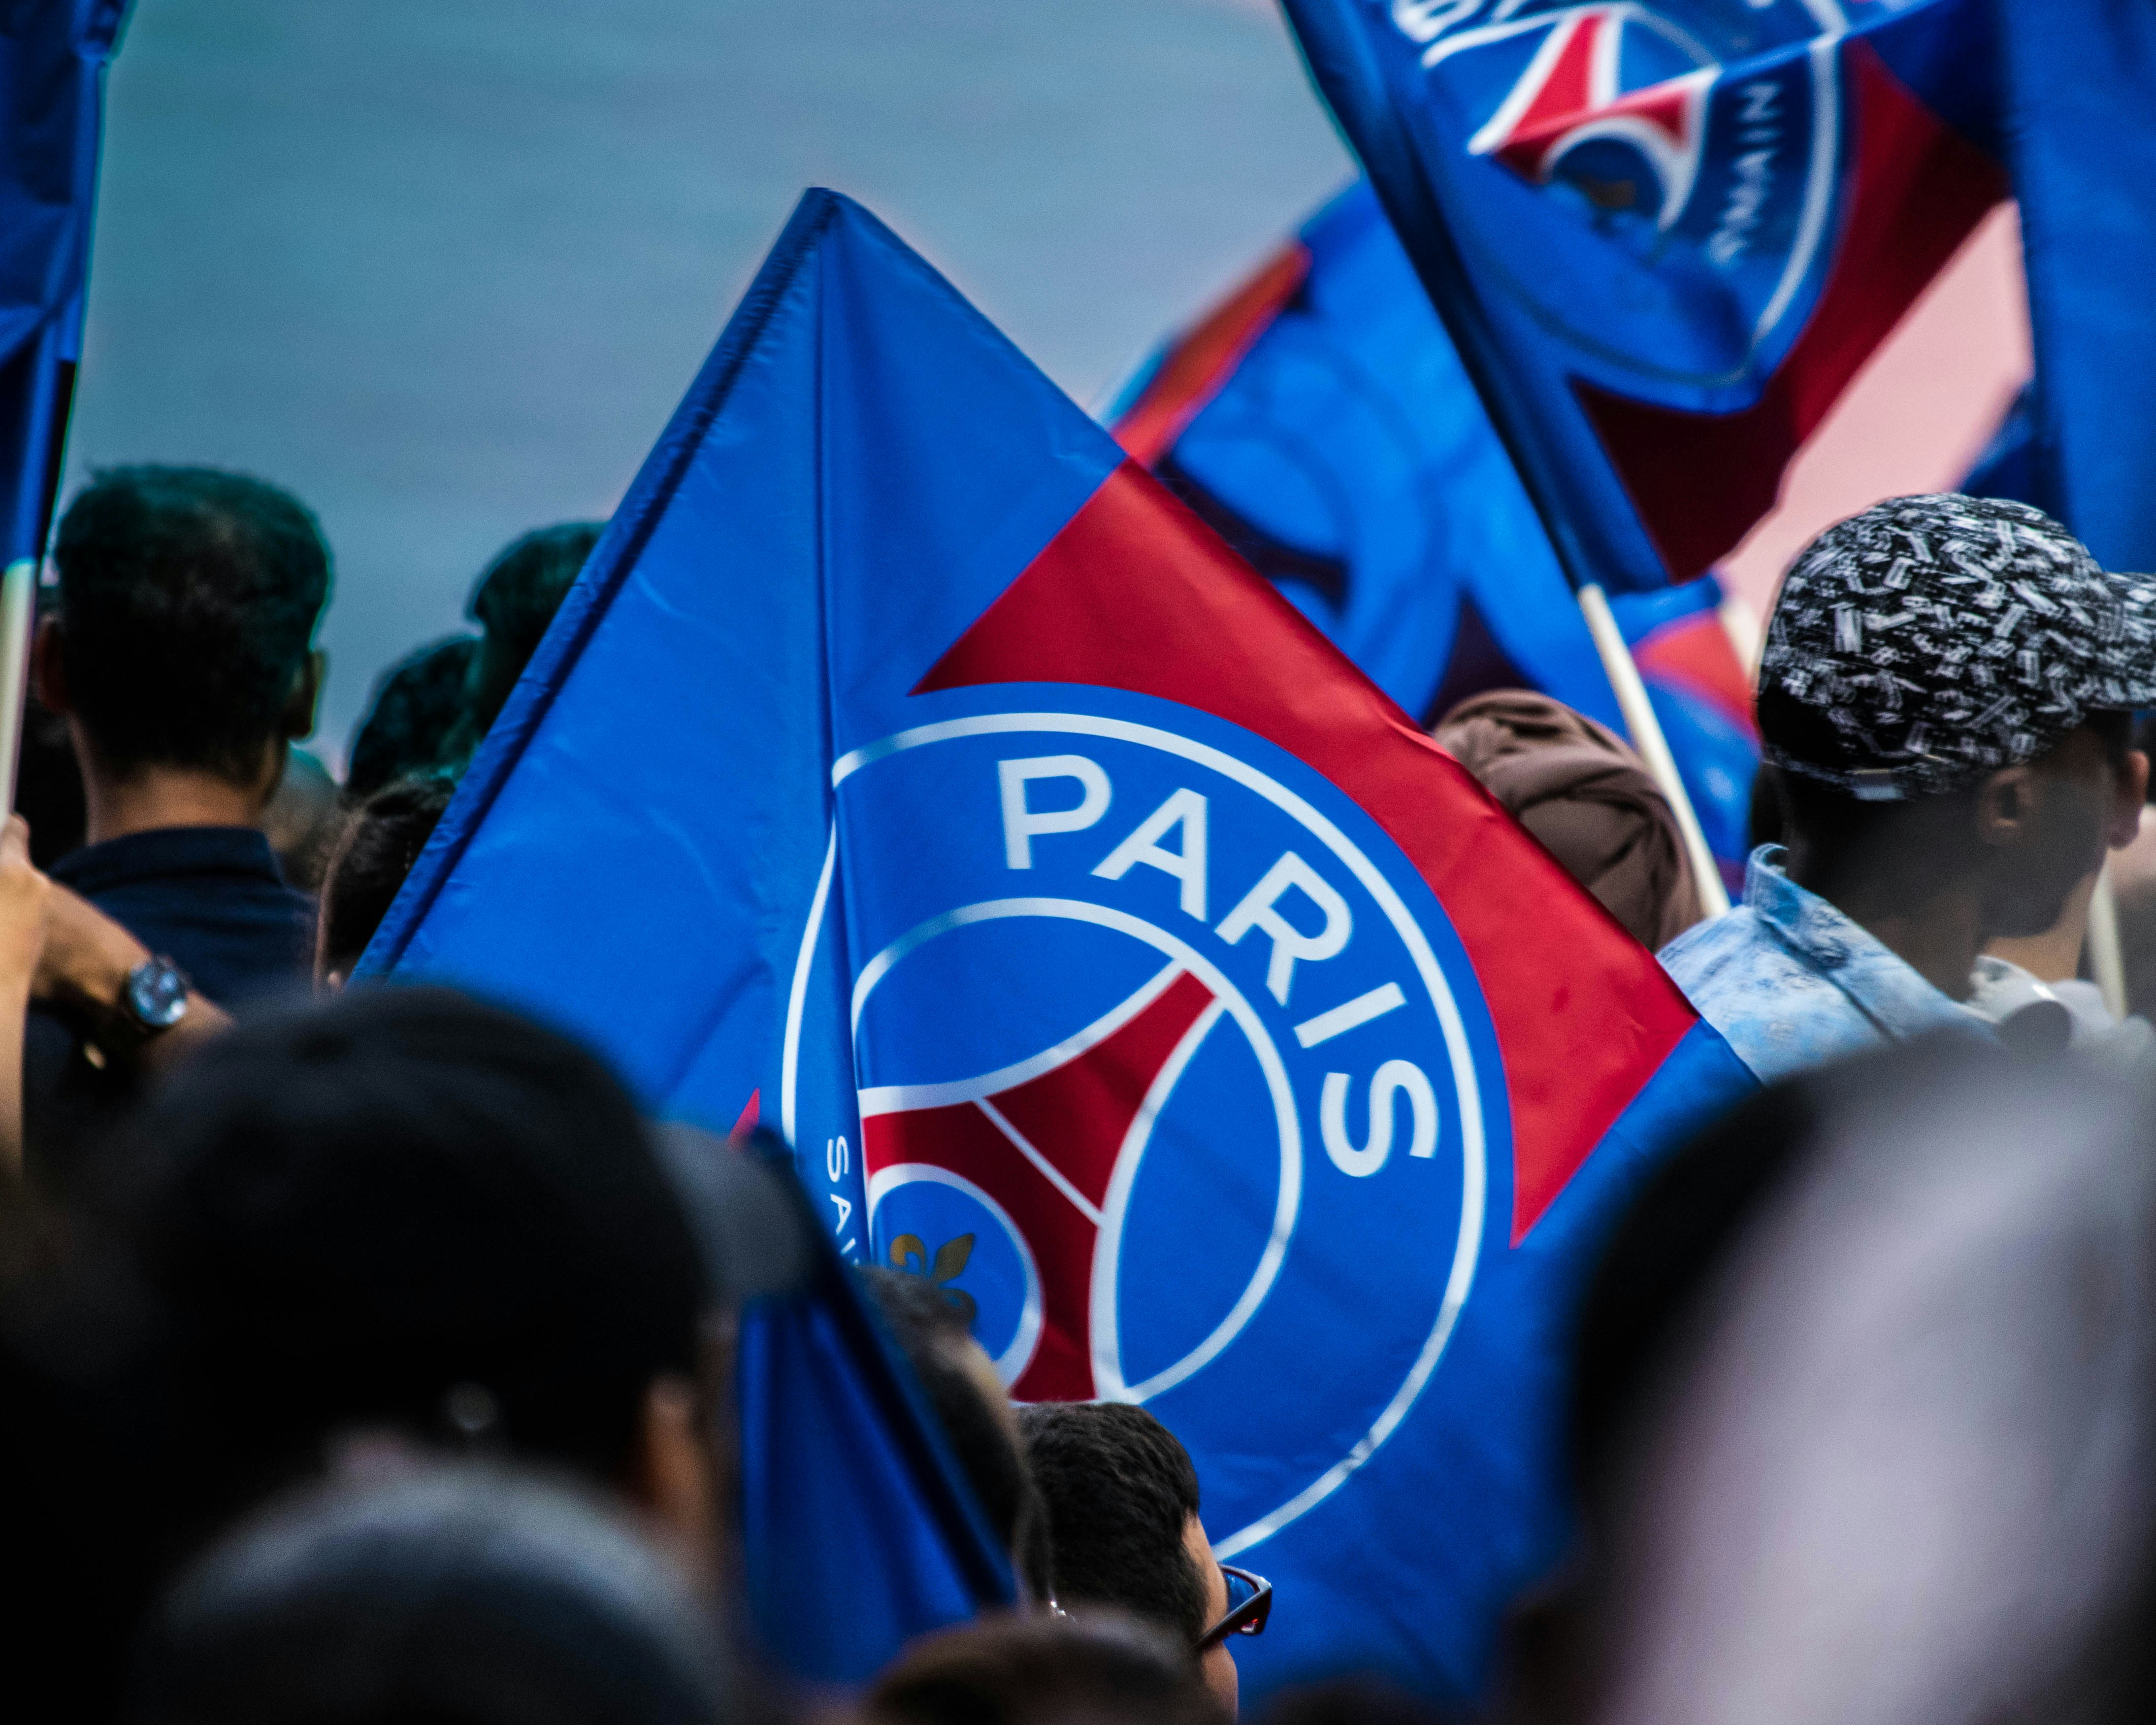 A fan flying the Paris Saint-Germain, PSG flag